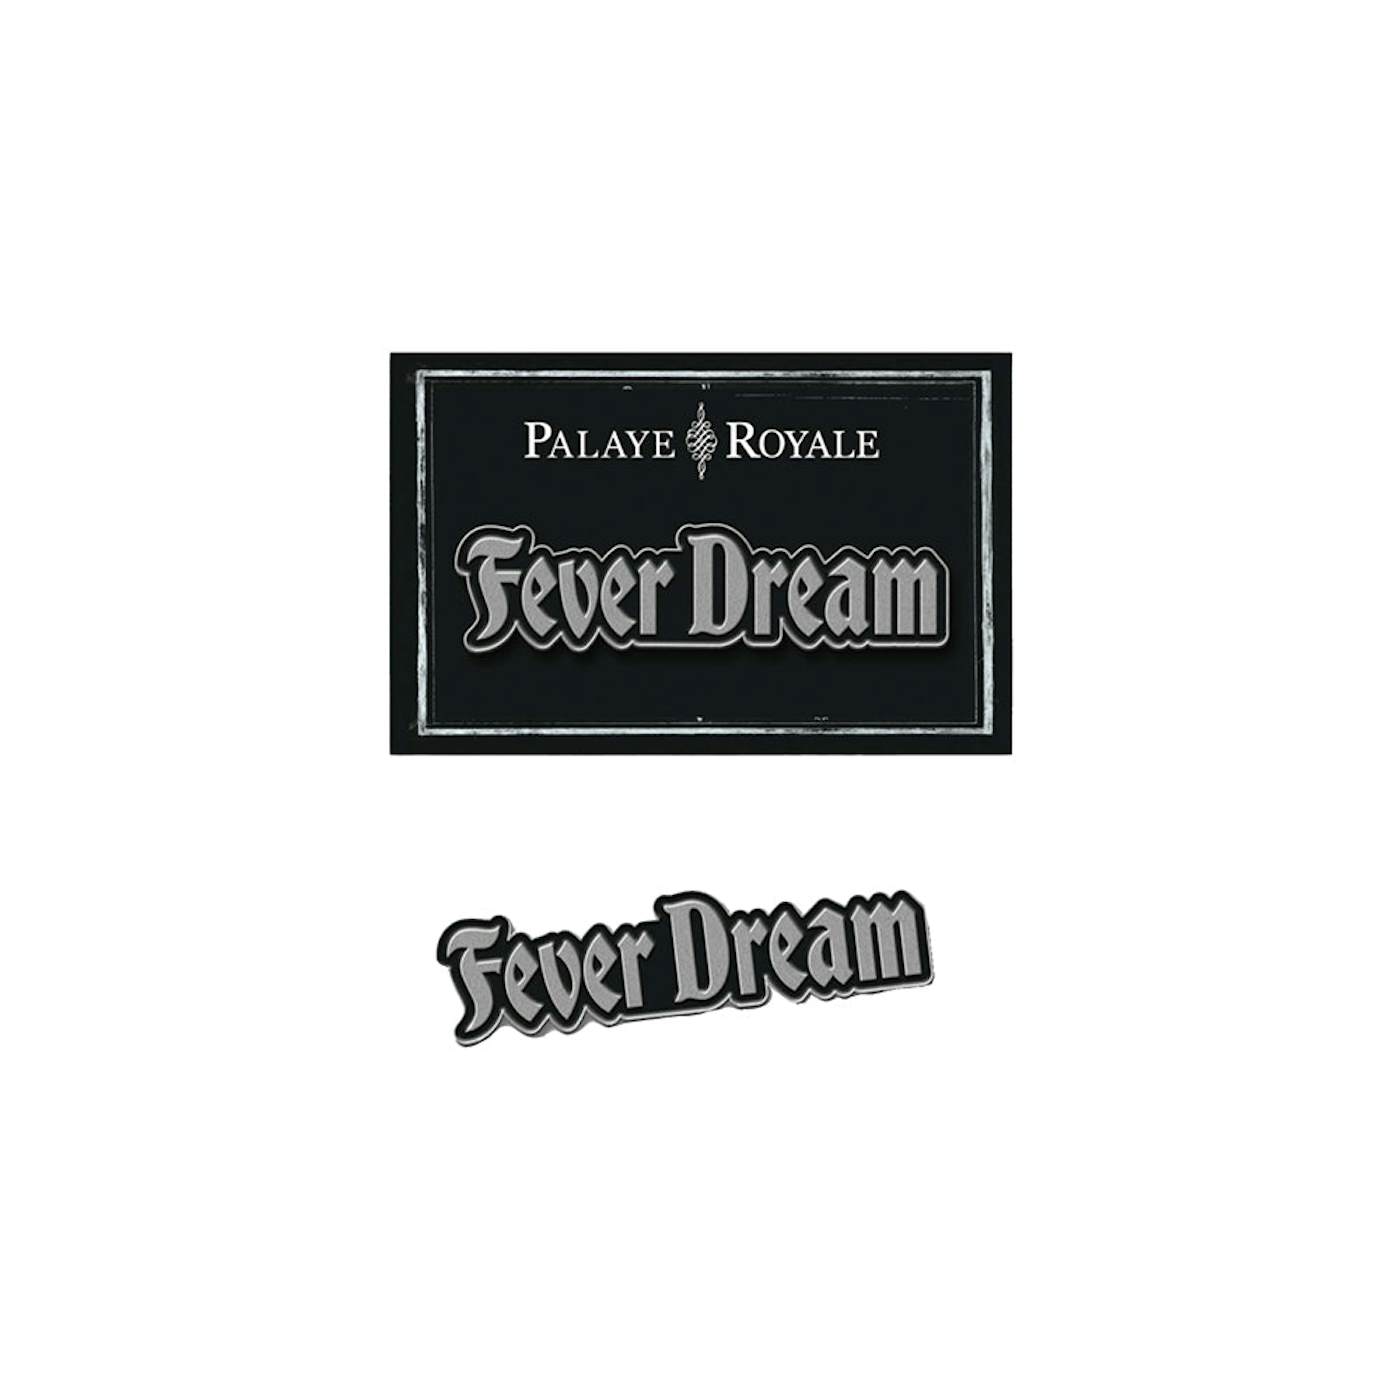 Palaye Royale "Fever Dream" Enamel Pin